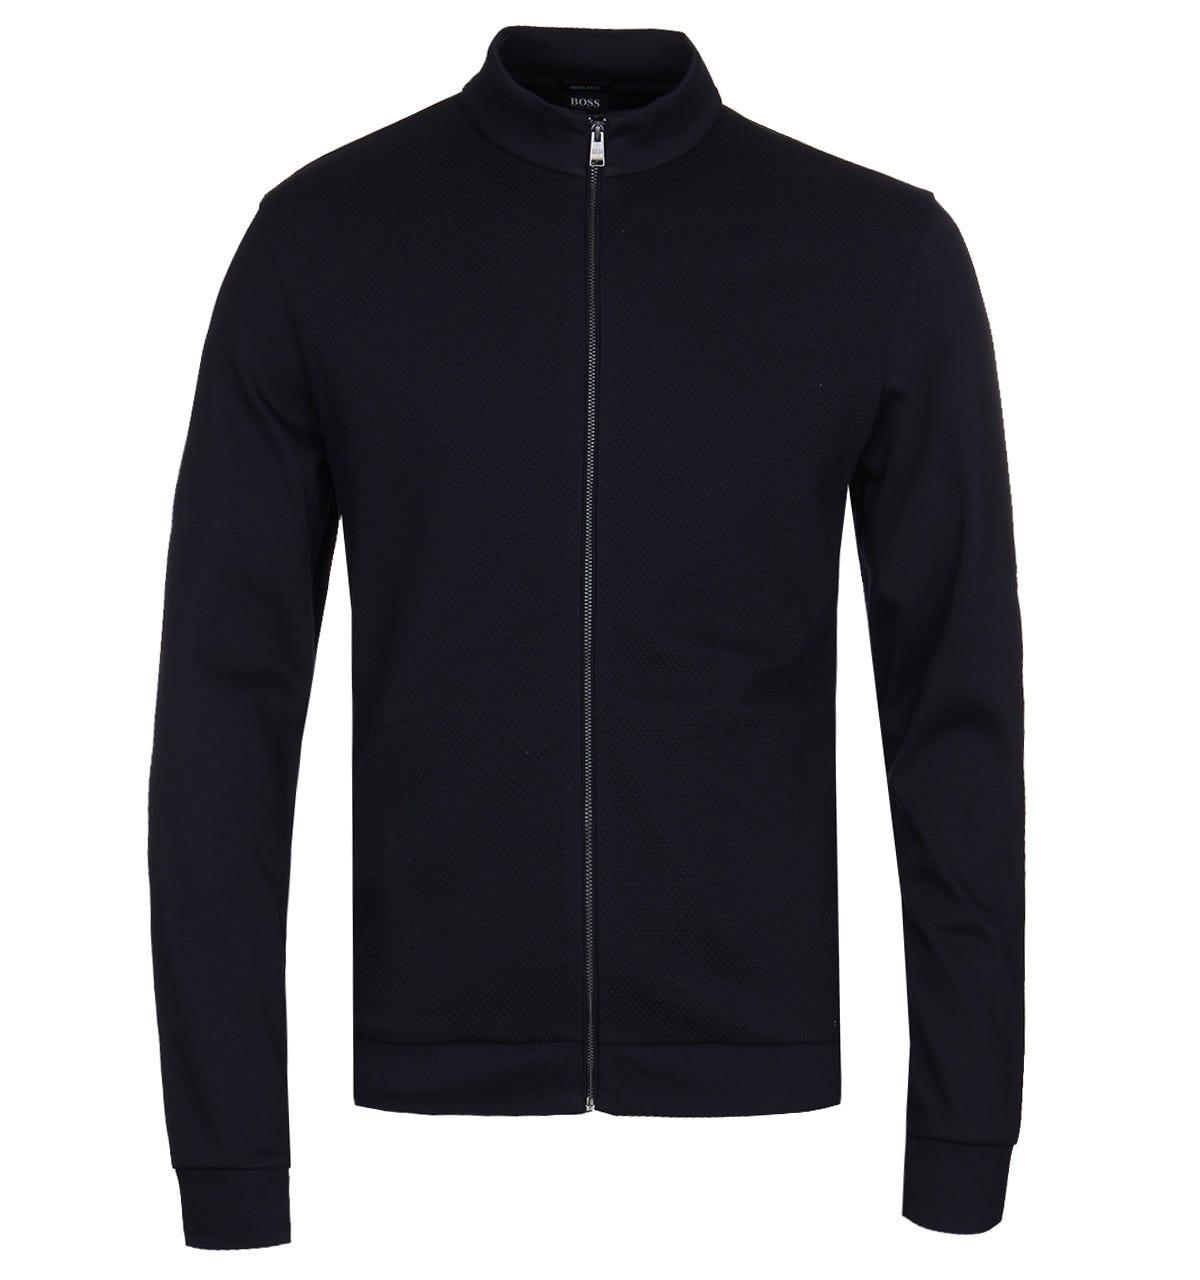 BOSS by HUGO BOSS Cotton Skiles02 Textured Zip-through Sweatshirt in Navy  (Blue) for Men - Lyst